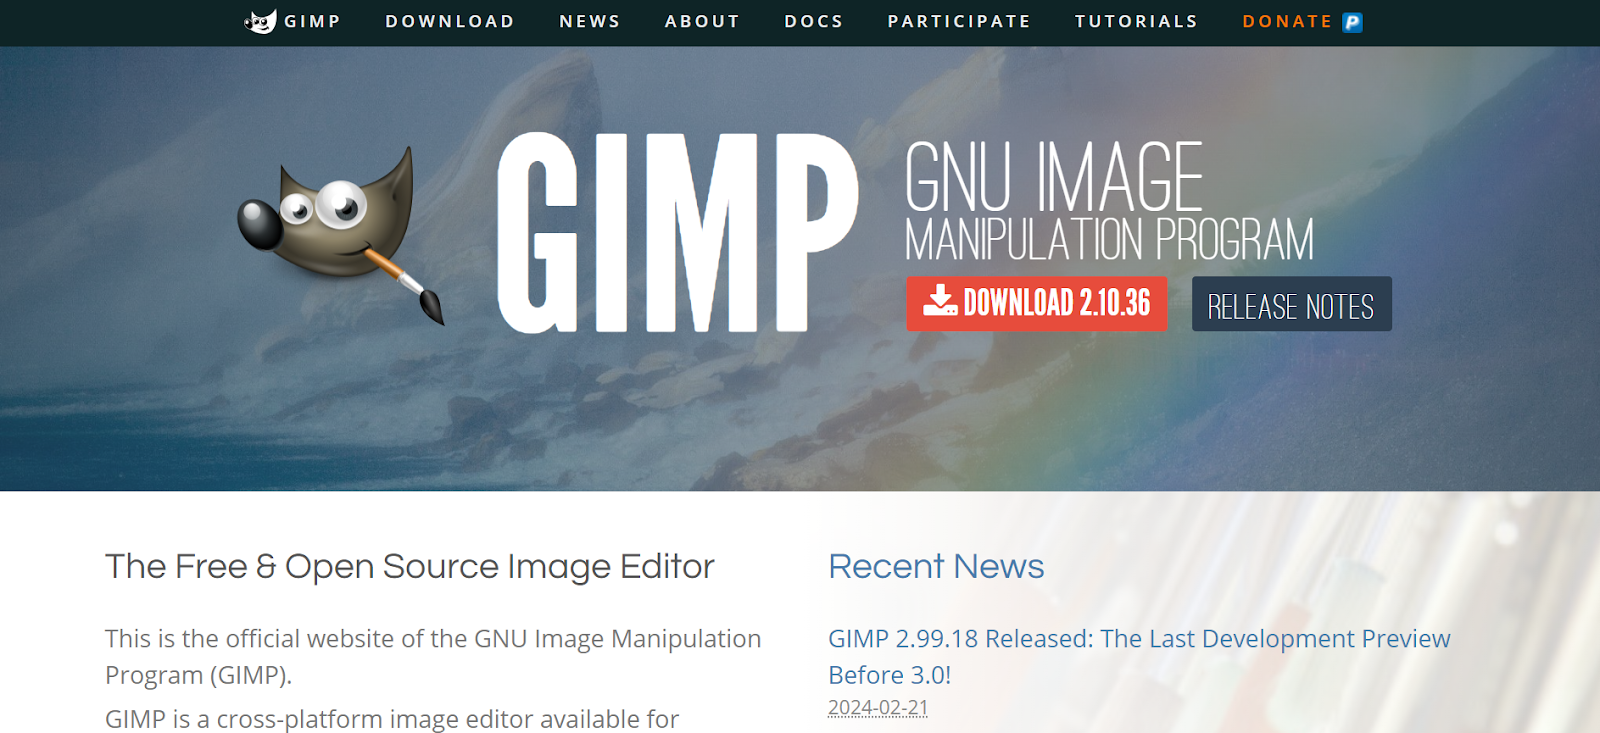 gimp motion graphics software